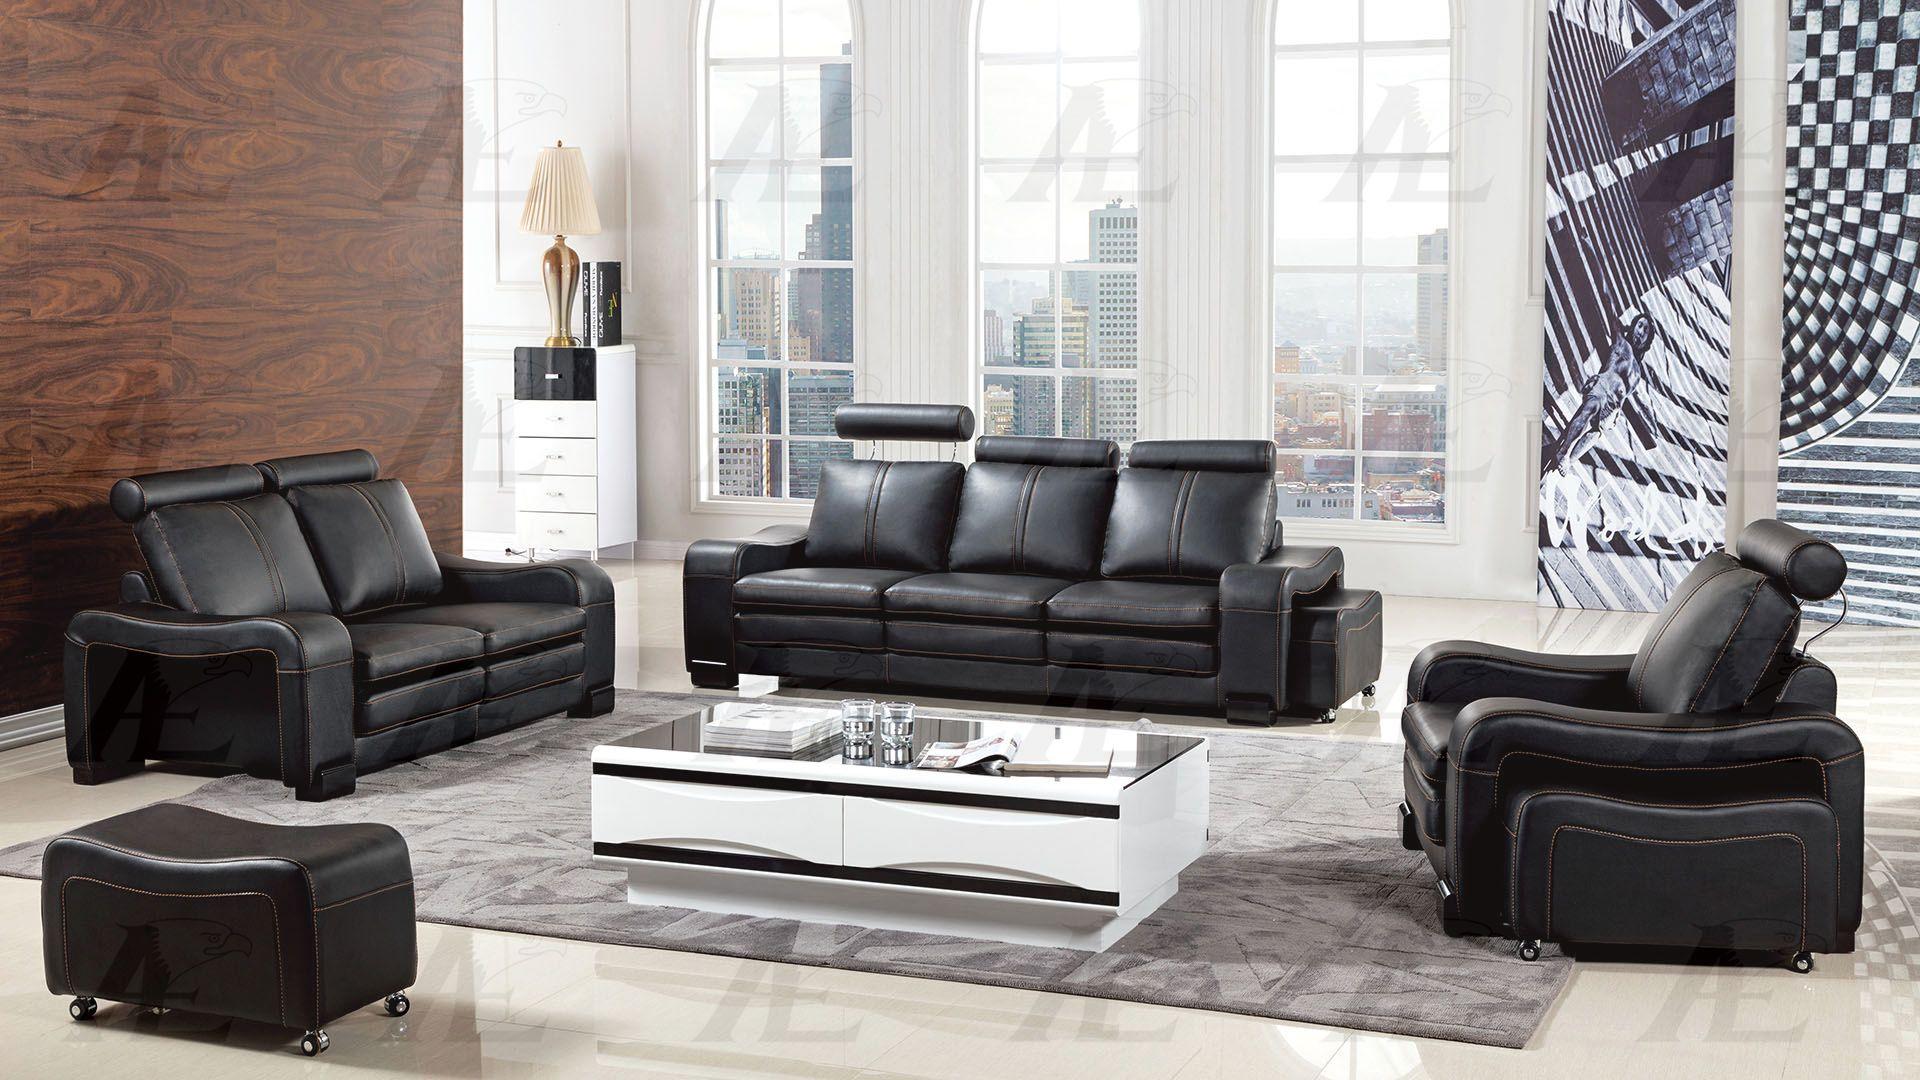 

                    
American Eagle Furniture AE210-BK-SF Sofa and Ottoman Black Faux Leather Purchase 
